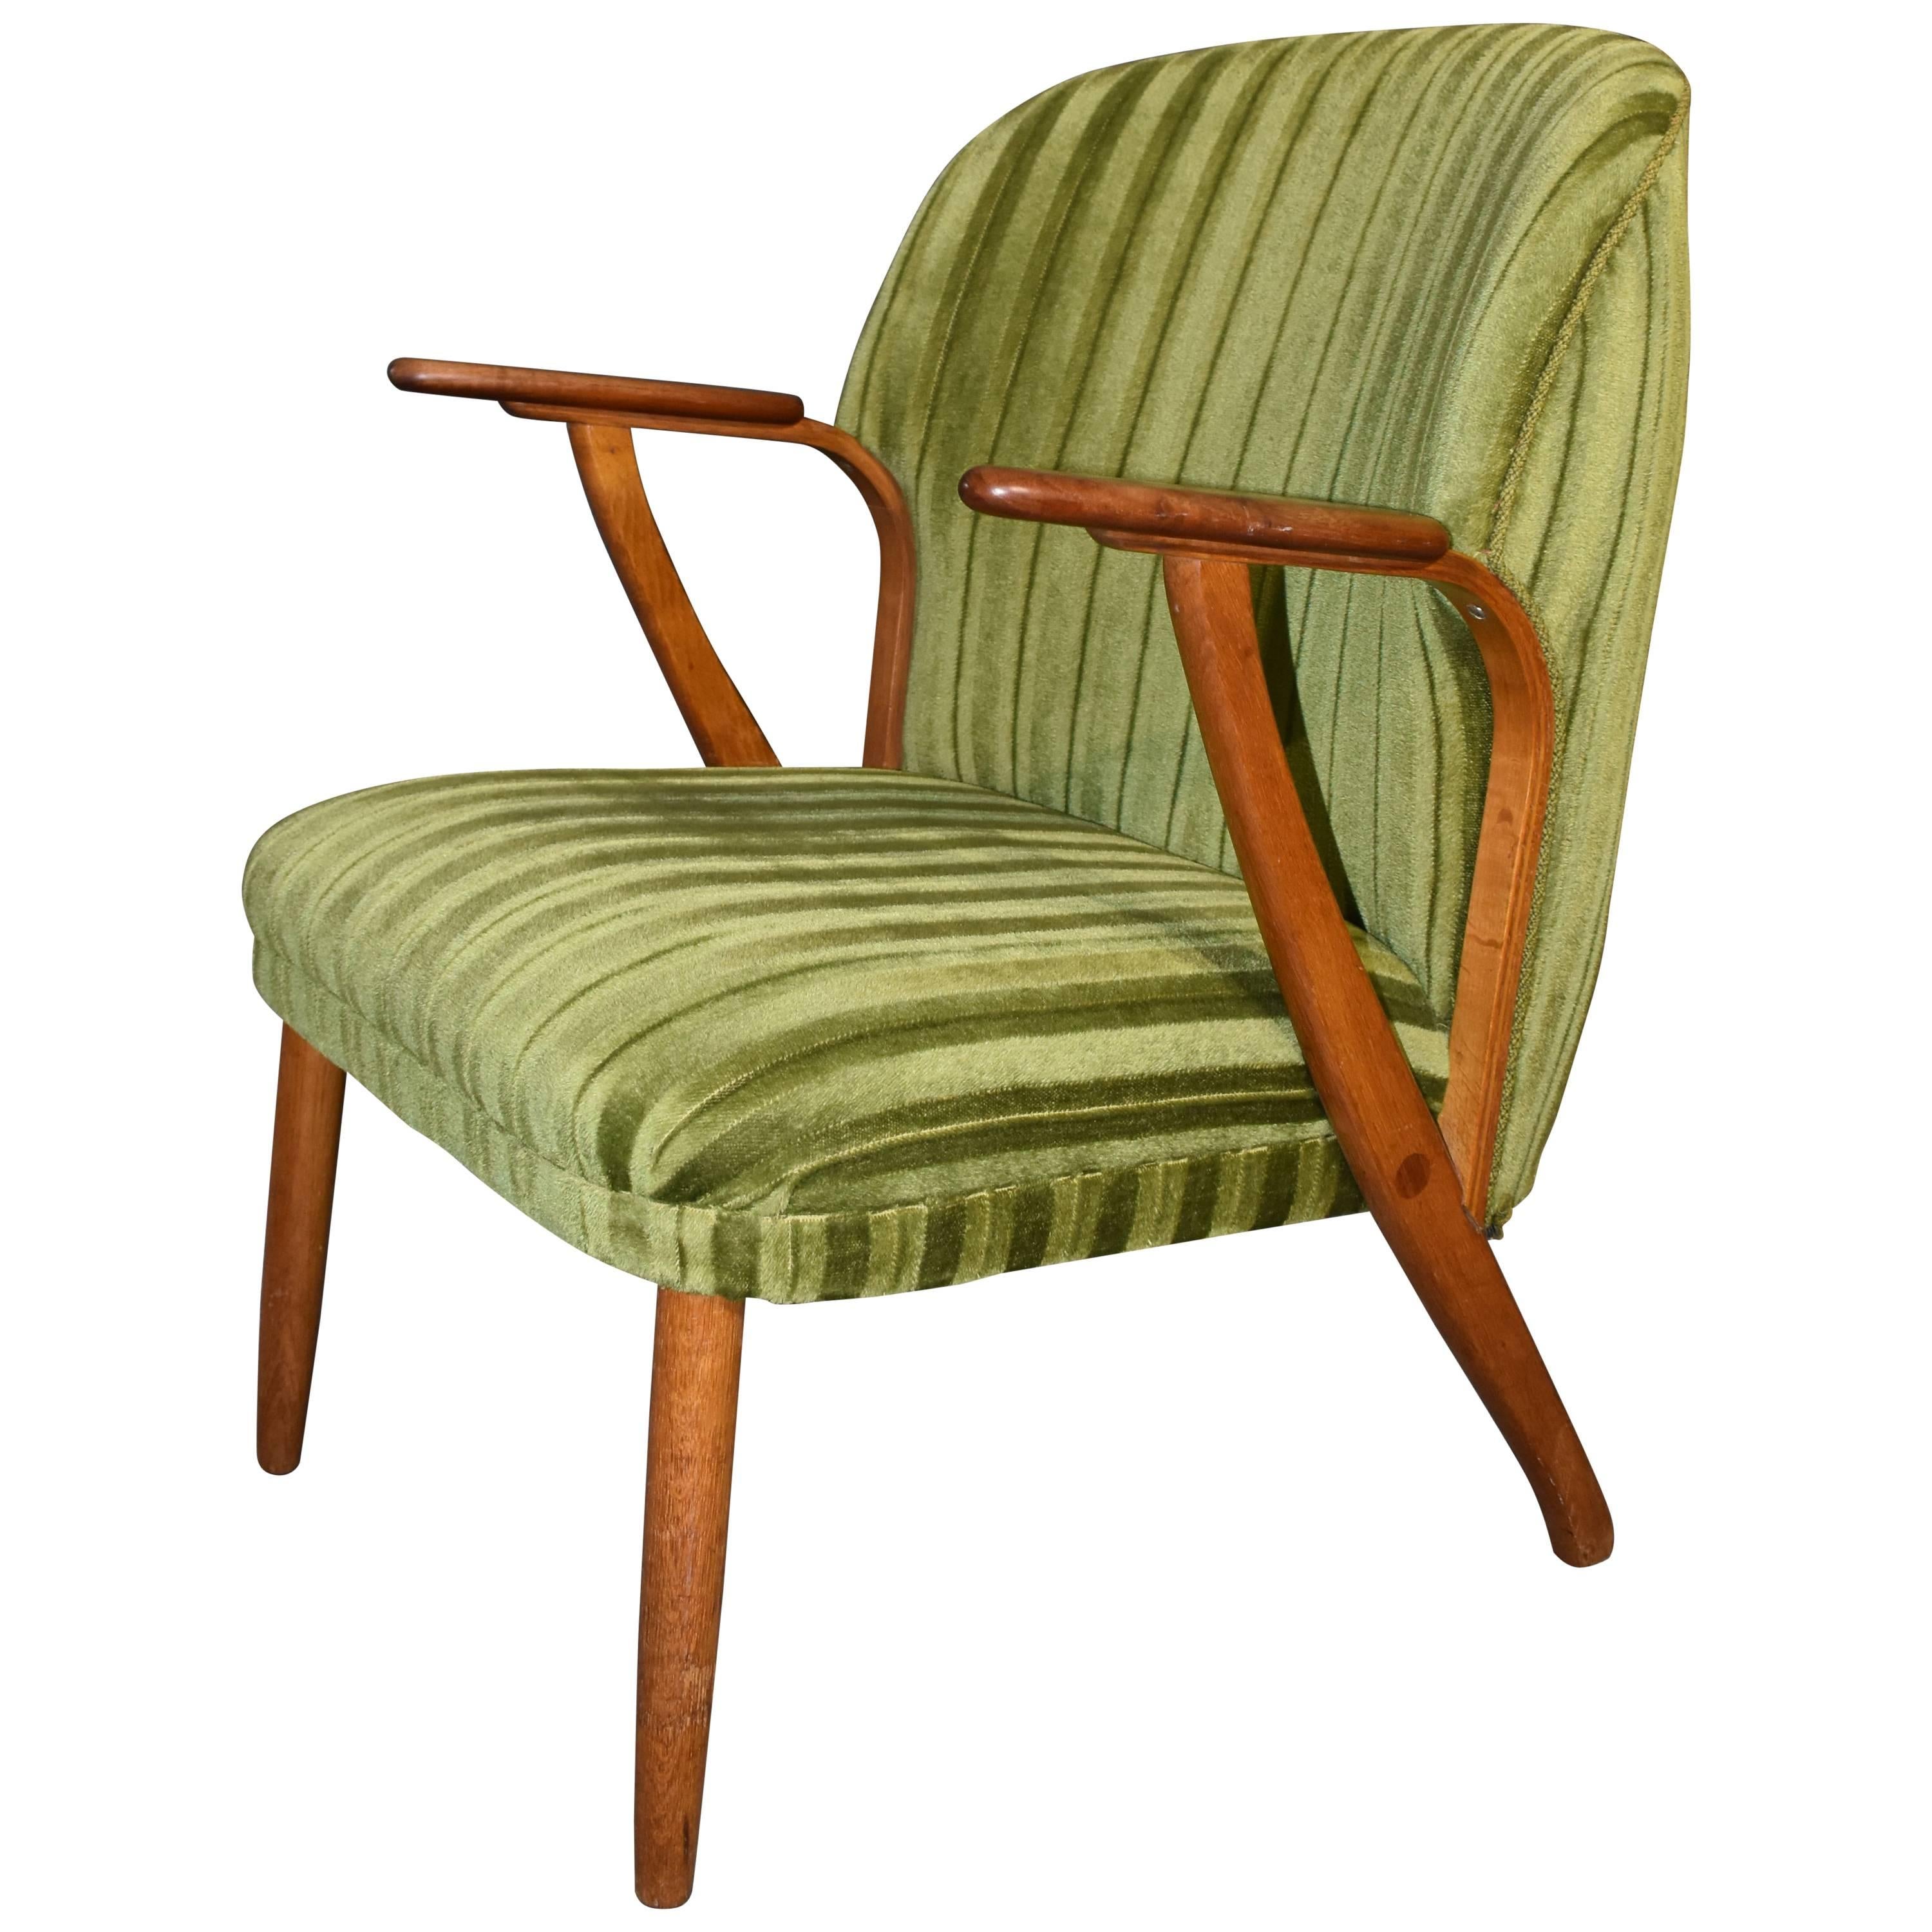 Danish Mid-Century Modern Green Teak Lounge Chair, 1960s For Sale